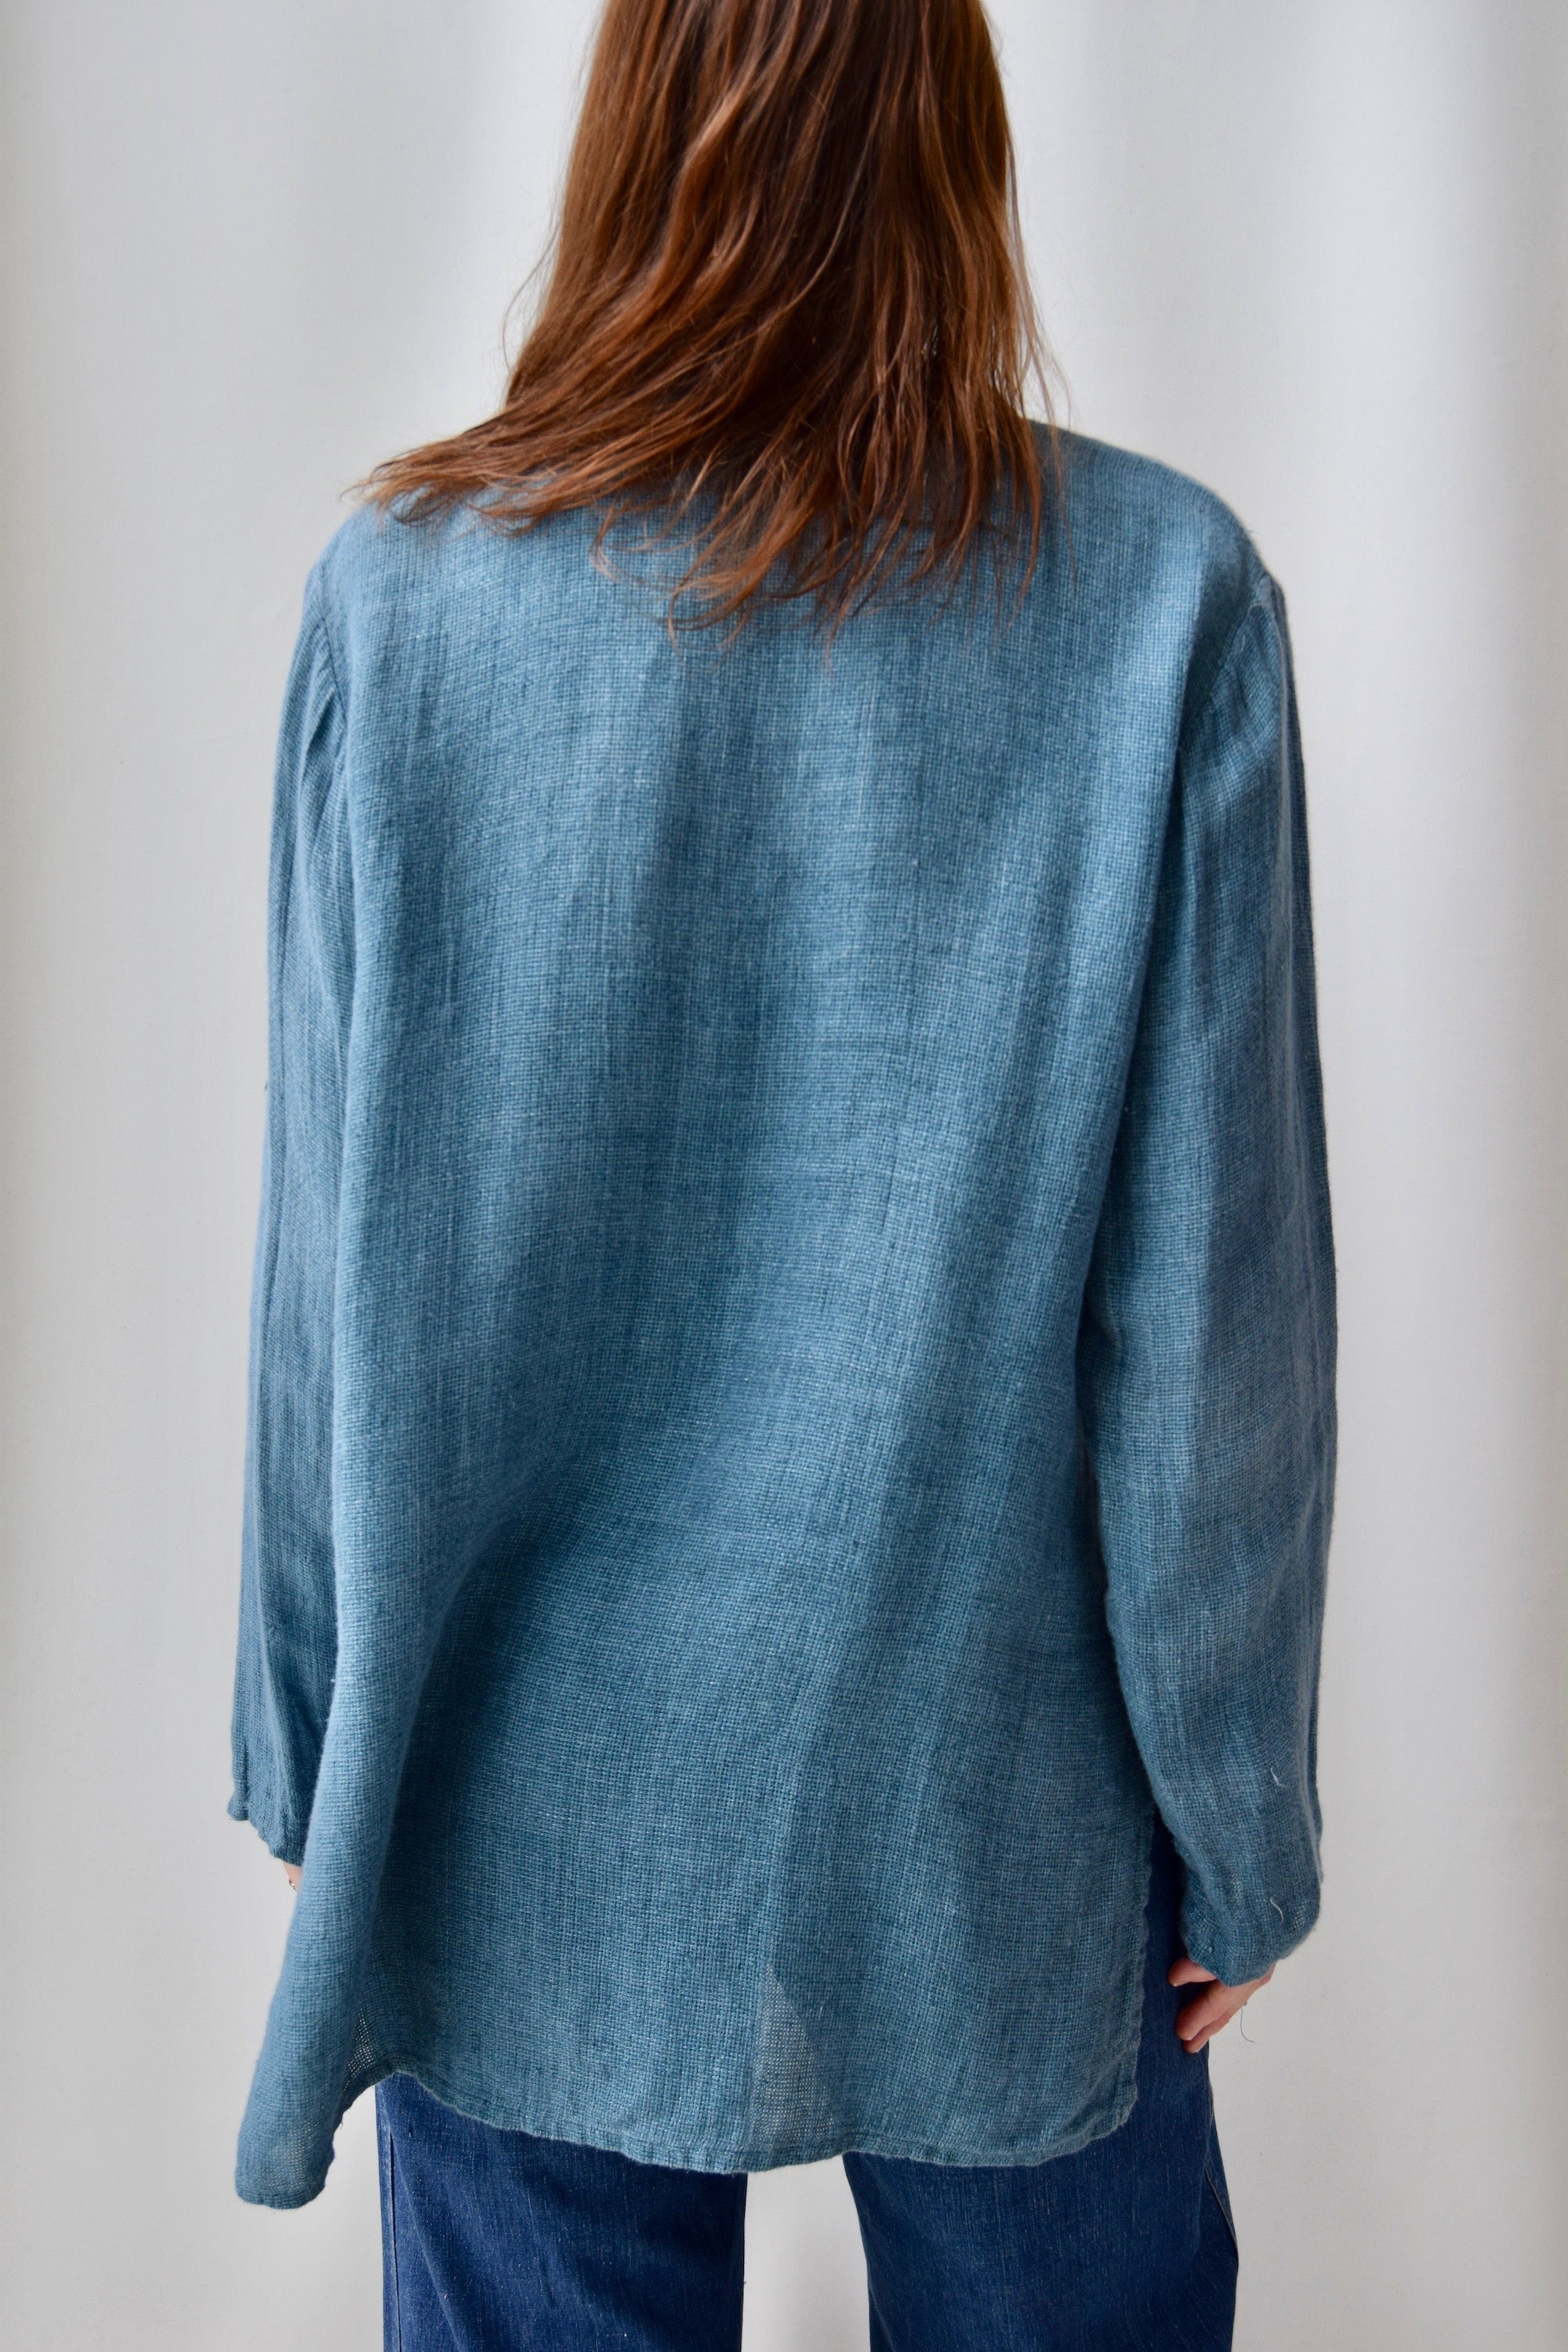 Eileen Fisher Turquoise Linen Top